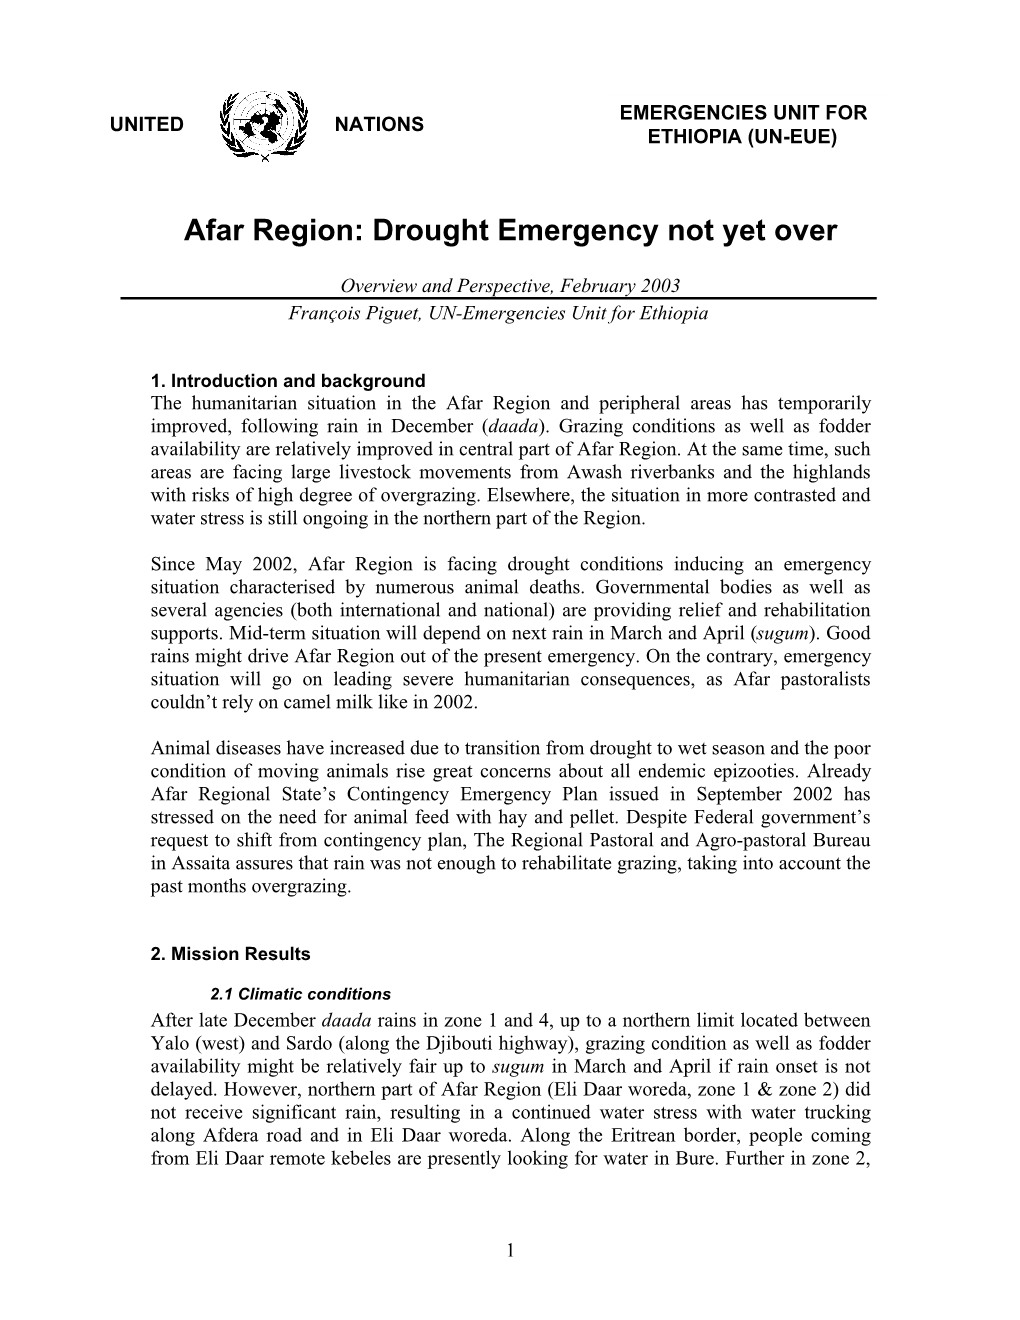 Afar Region: Drought Emergency Not Yet Over